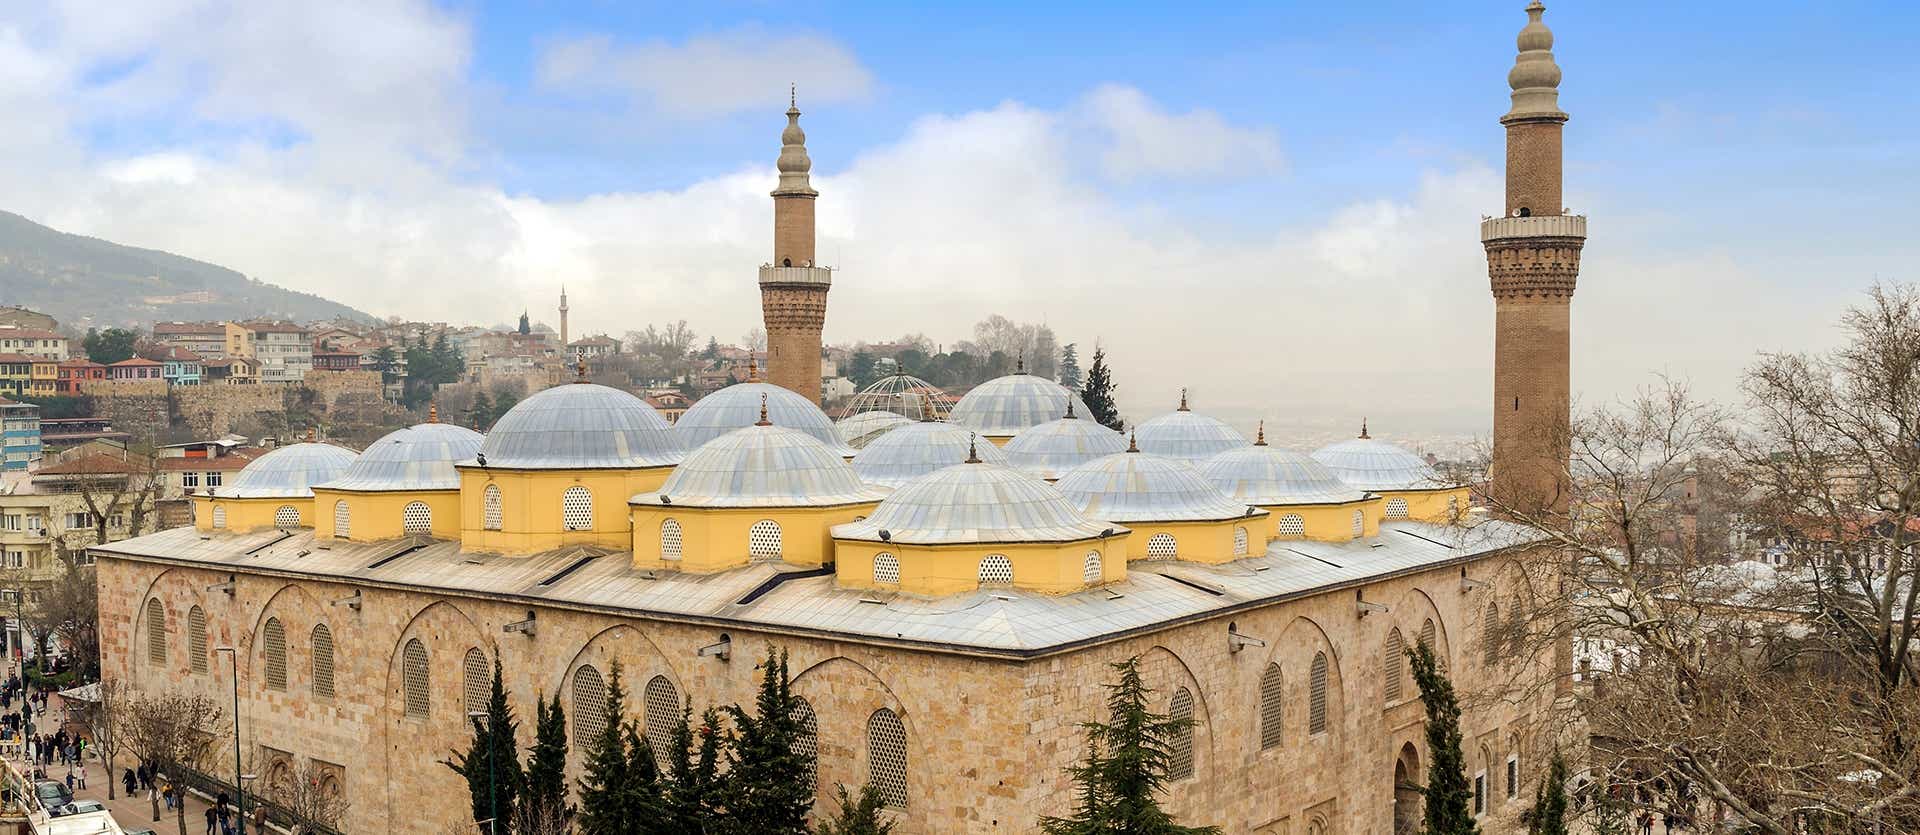 Mezquita Ulu Cami <span class="iconos separador"></span> Bursa 